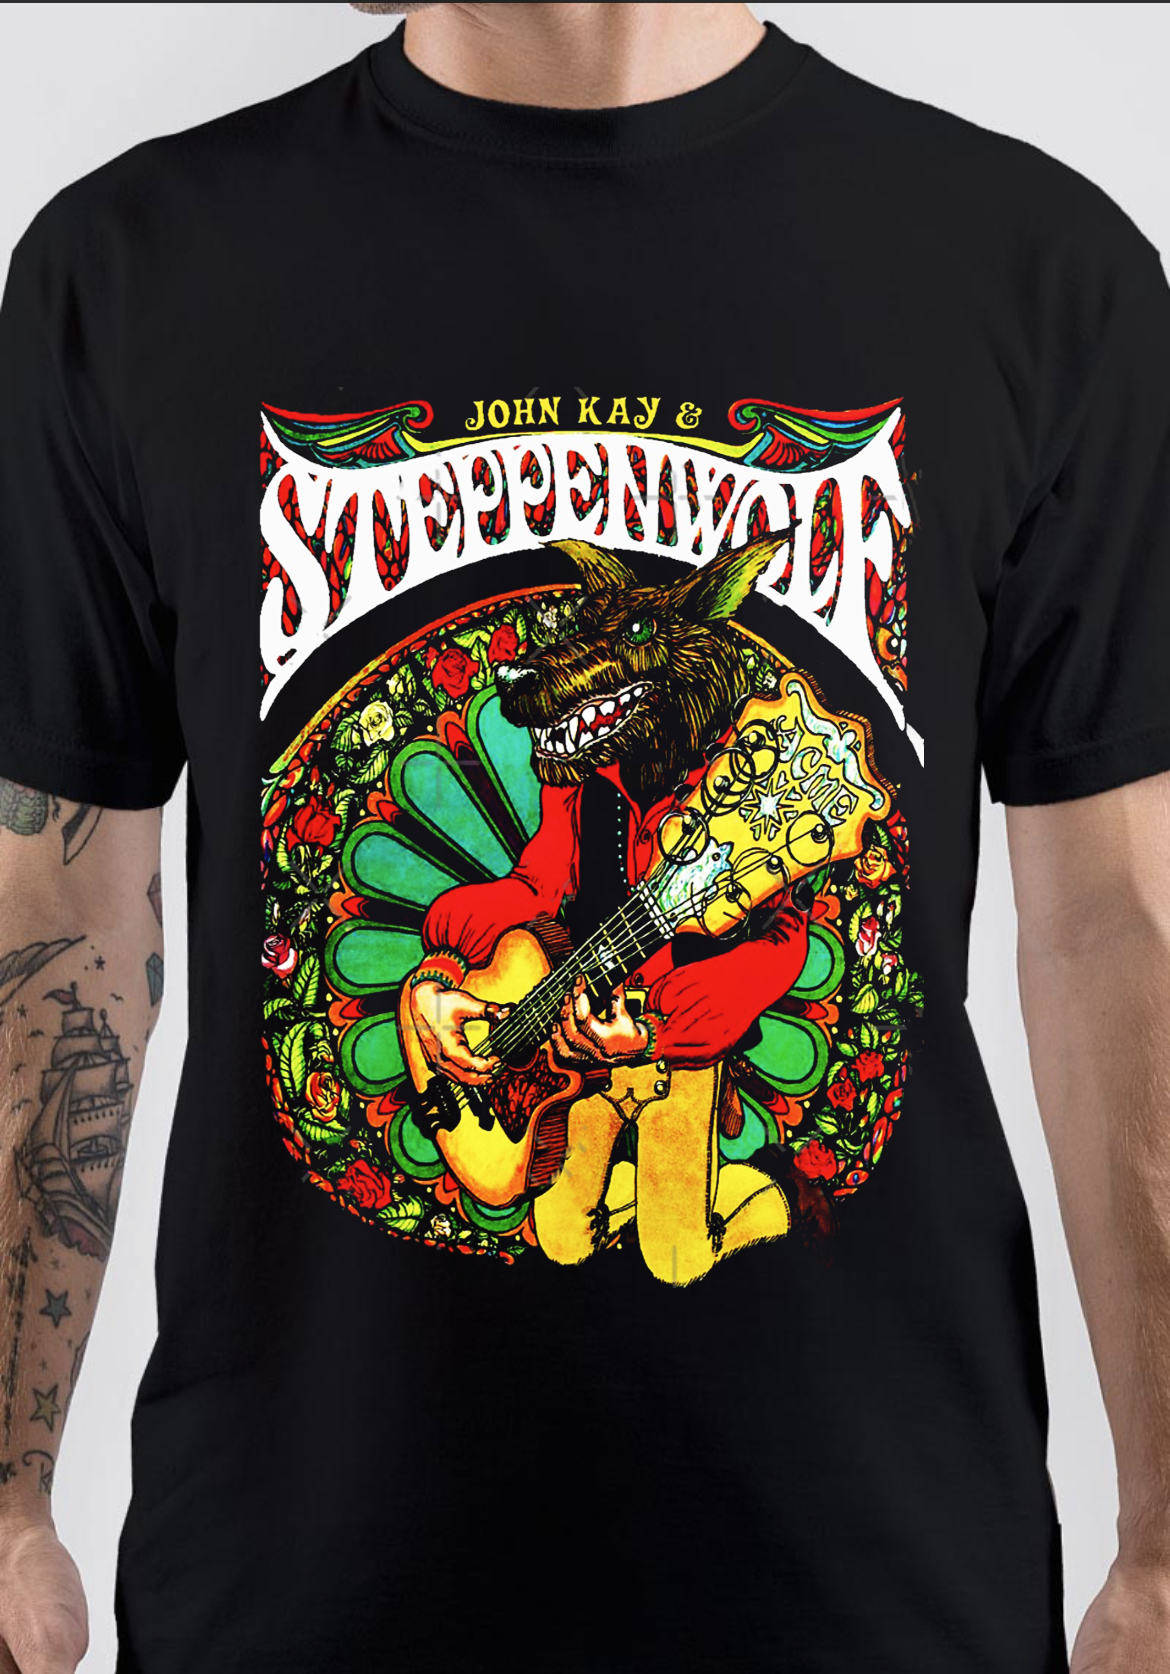 Steppenwolf T-Shirt And Merchandise